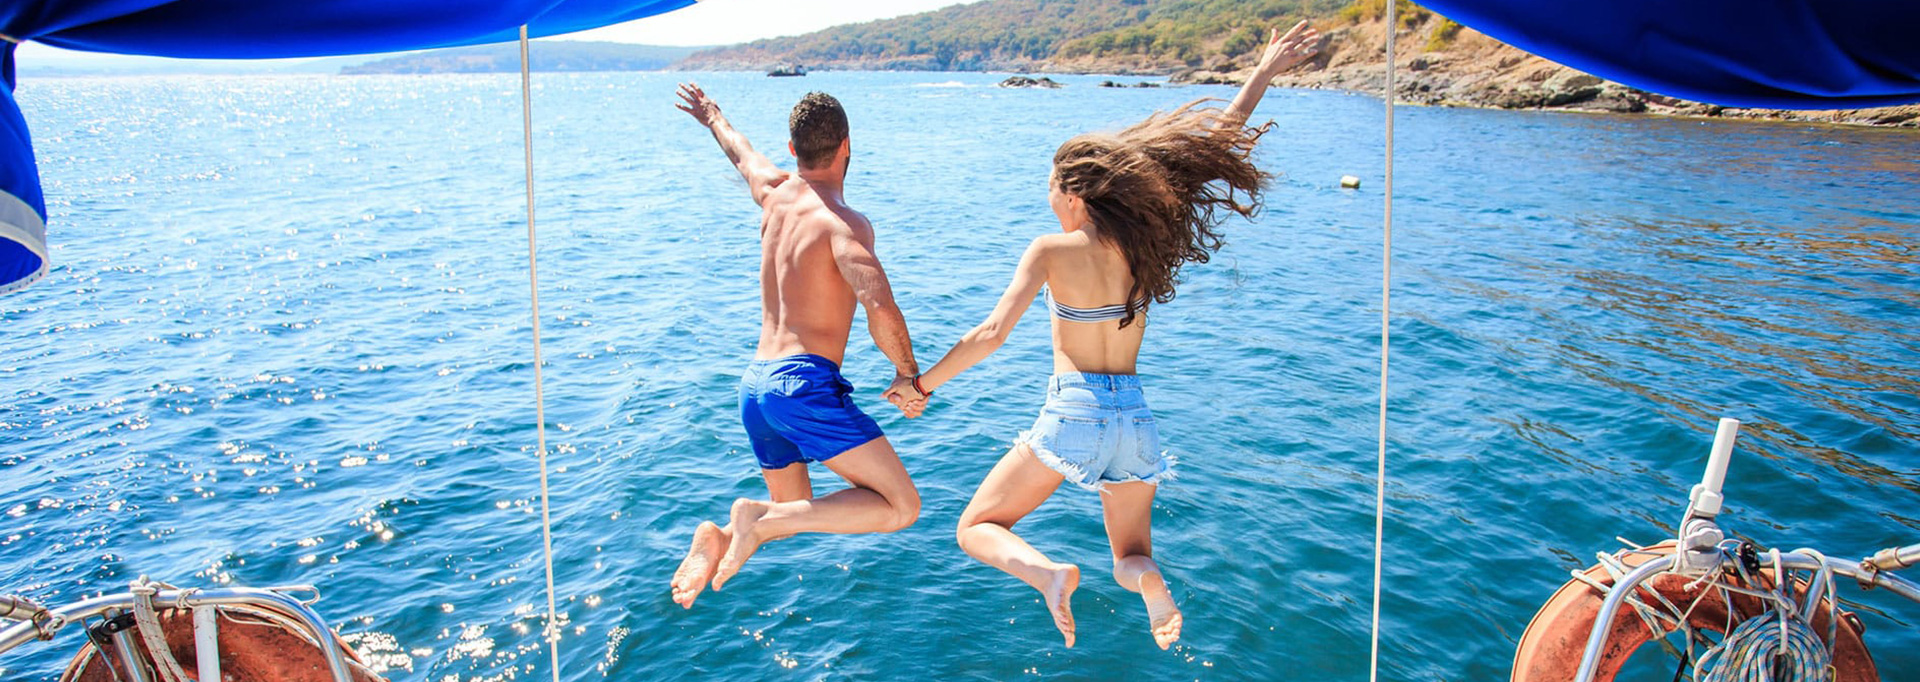 couple jumping off sailboat